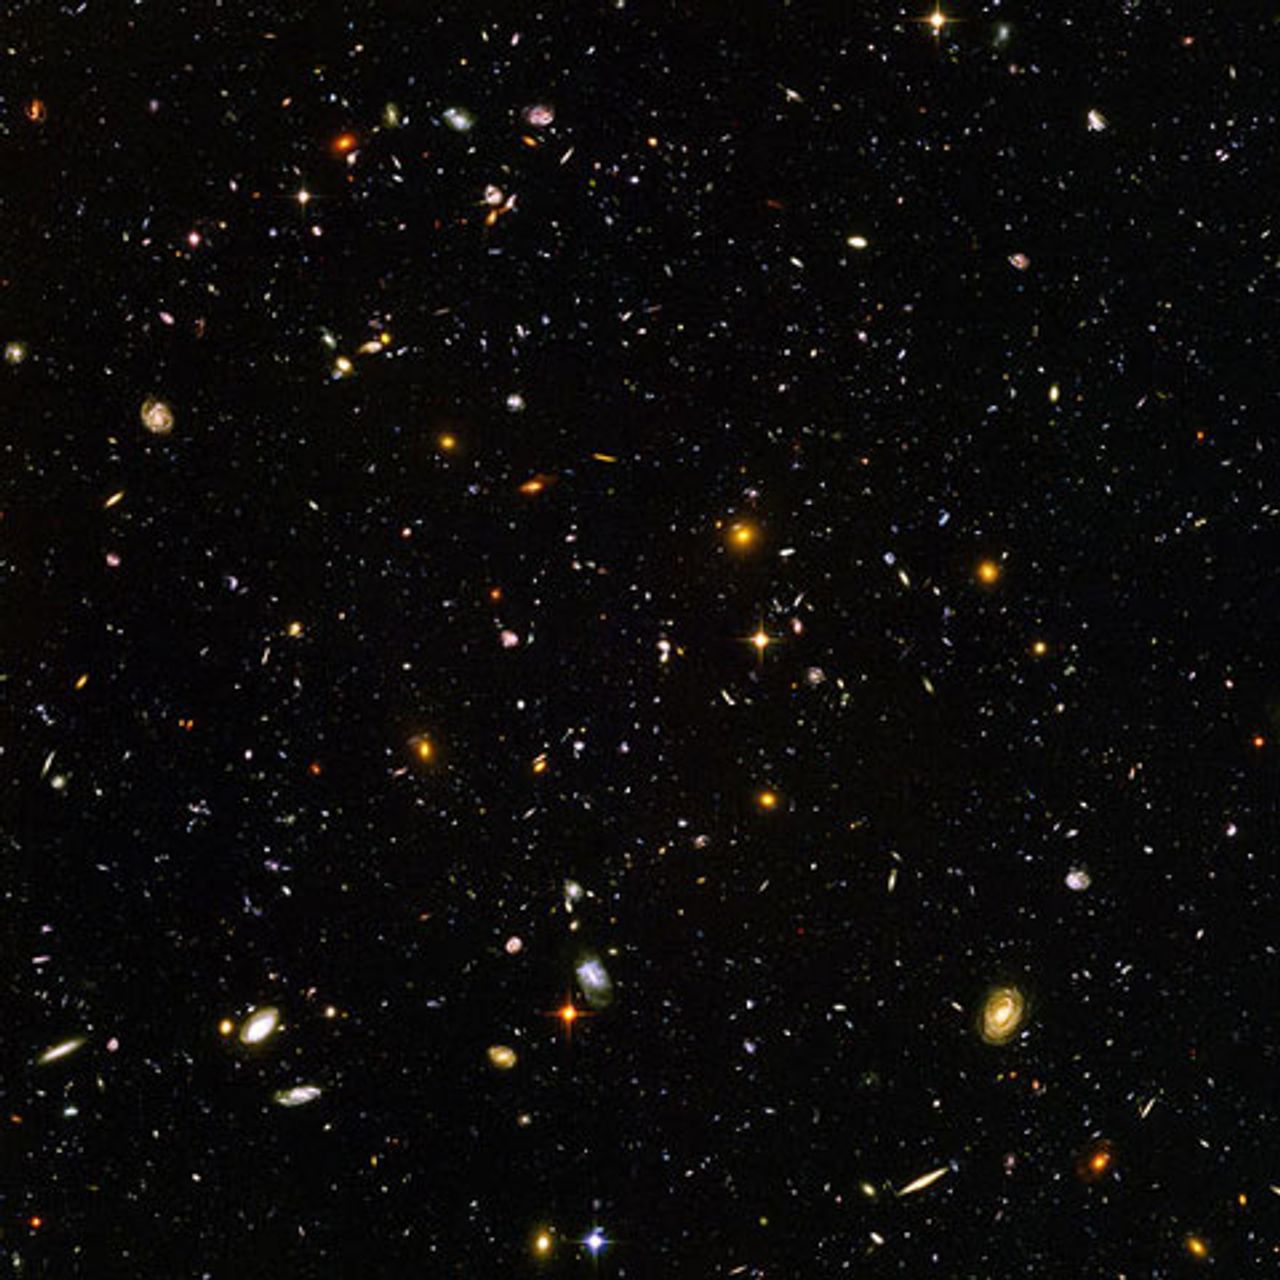 The Hubble Ultra Deep Field image